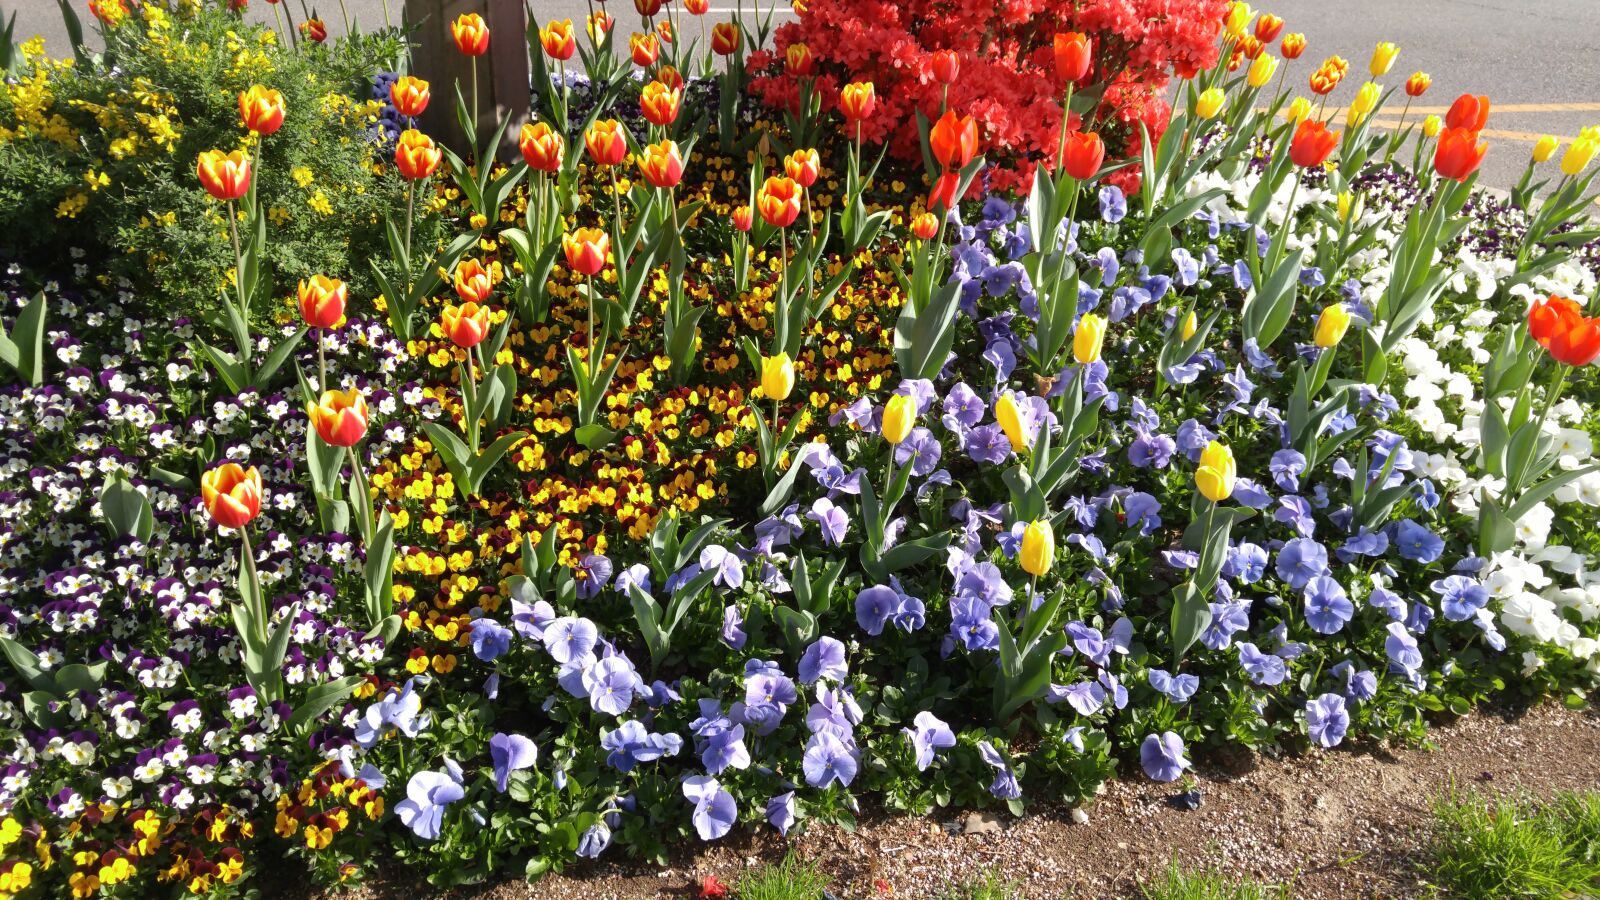 LG G4 sample photo. Flowers, flower gardens, blossom photography